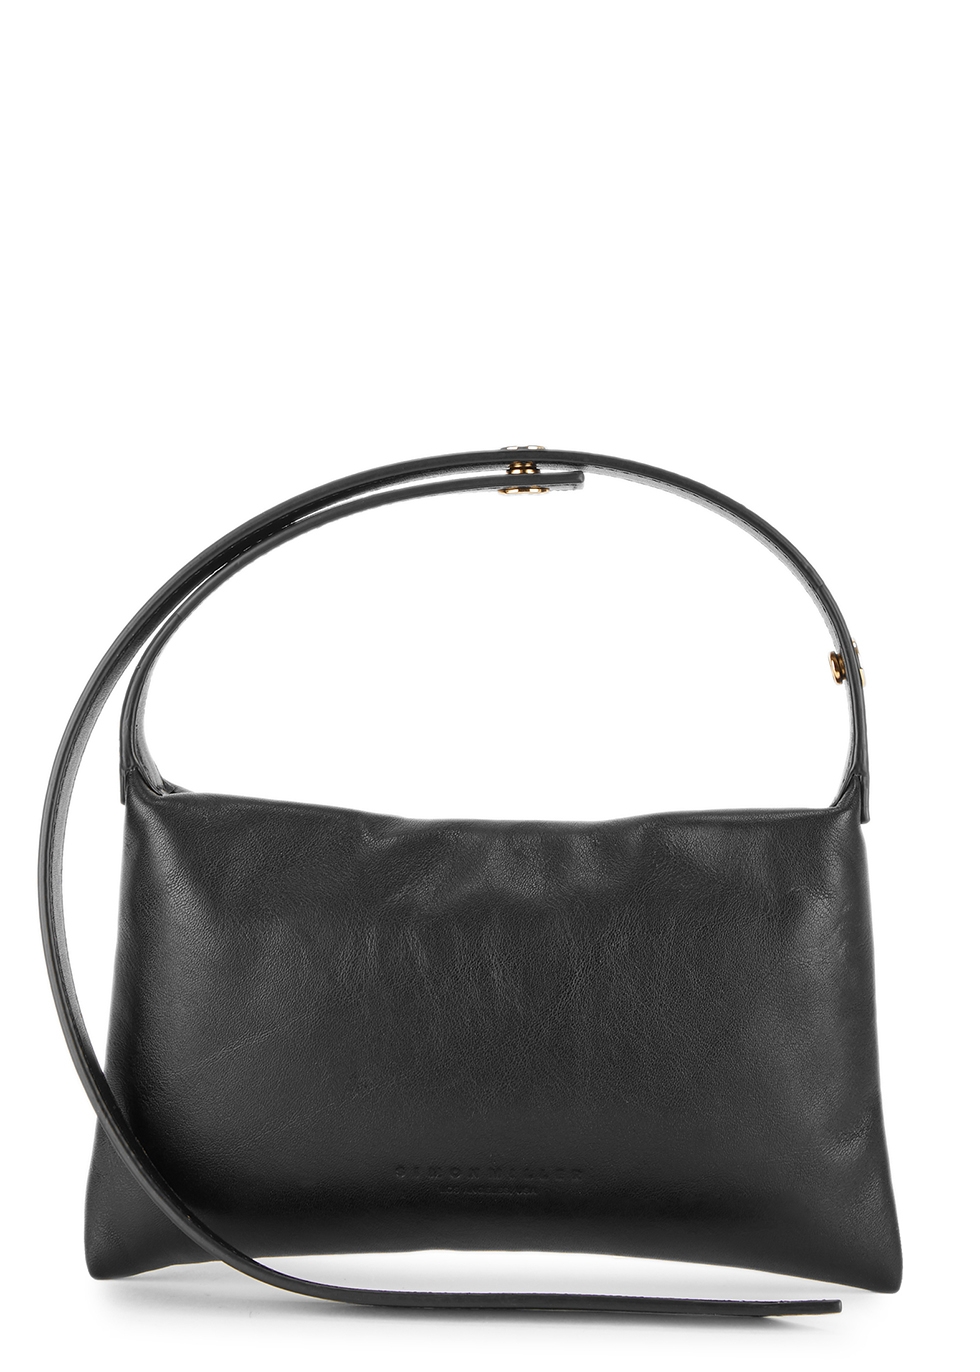 Mini Puffin black leather top handle bag